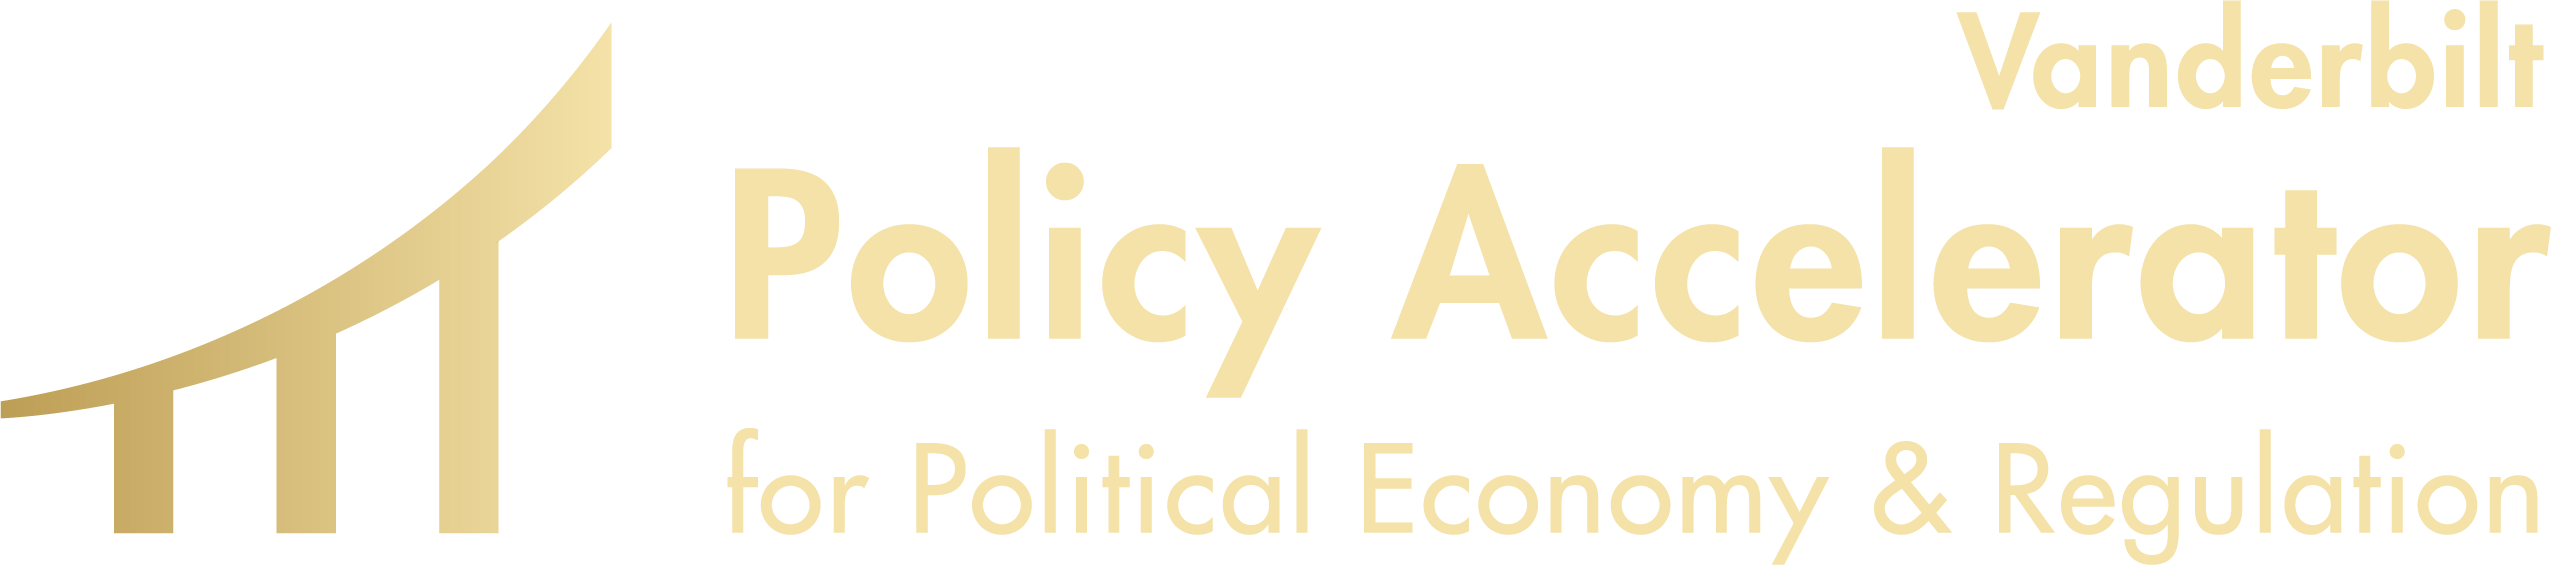 Vanderbilt announces creation of the Vanderbilt Policy Accelerator for Political Economy and Regulation